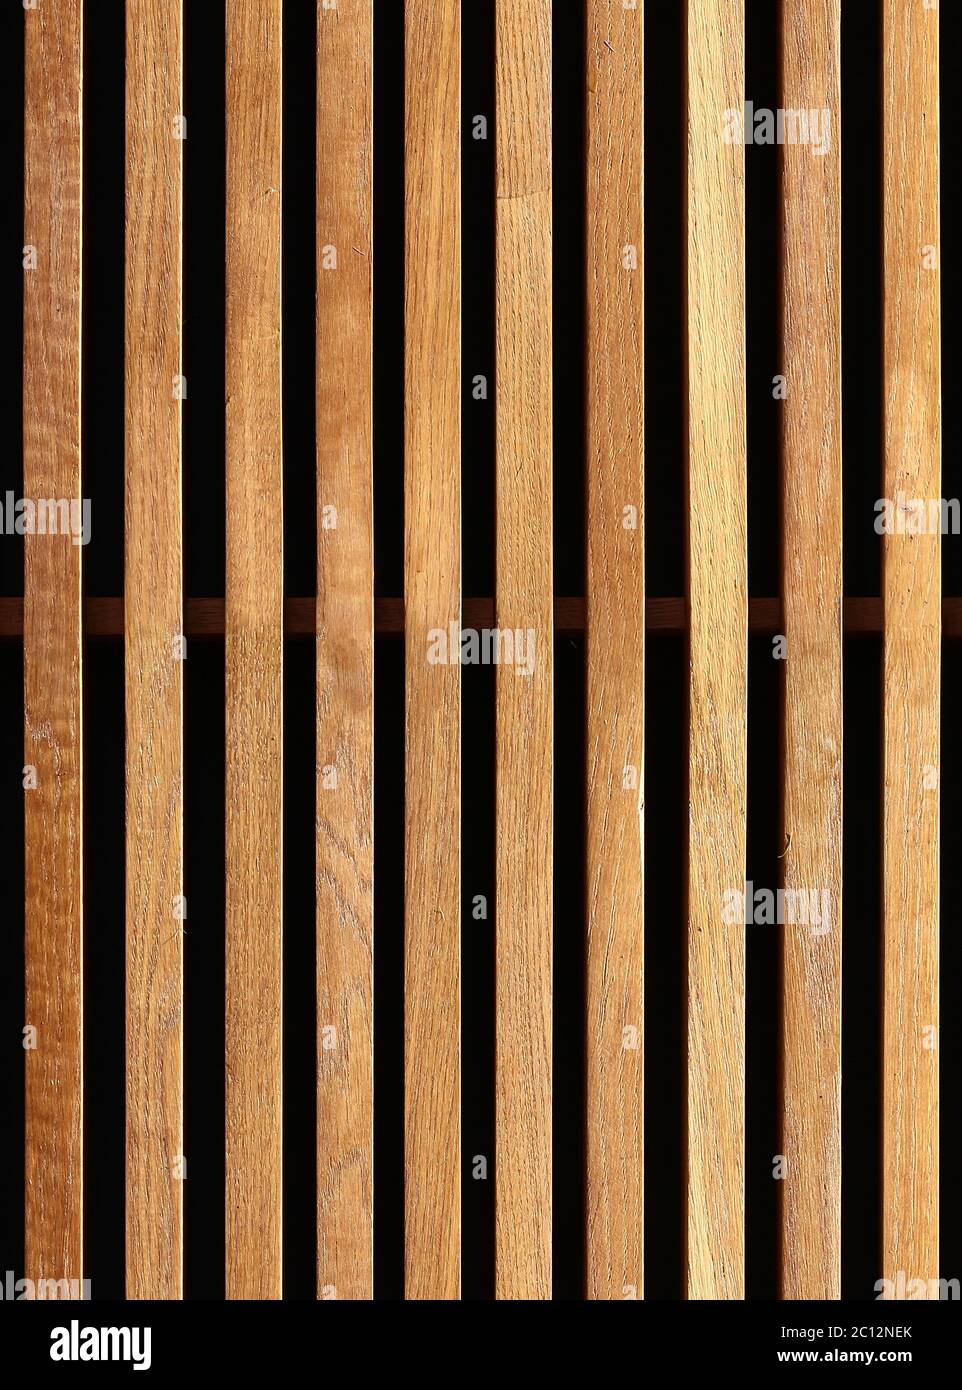 https://c8.alamy.com/compit/2c12nek/tessitura-senza-cuciture-di-listelli-decorativi-in-legno-posti-verticalmente-sulla-facciata-dell-edificio-new-york-stati-uniti-2c12nek.jpg